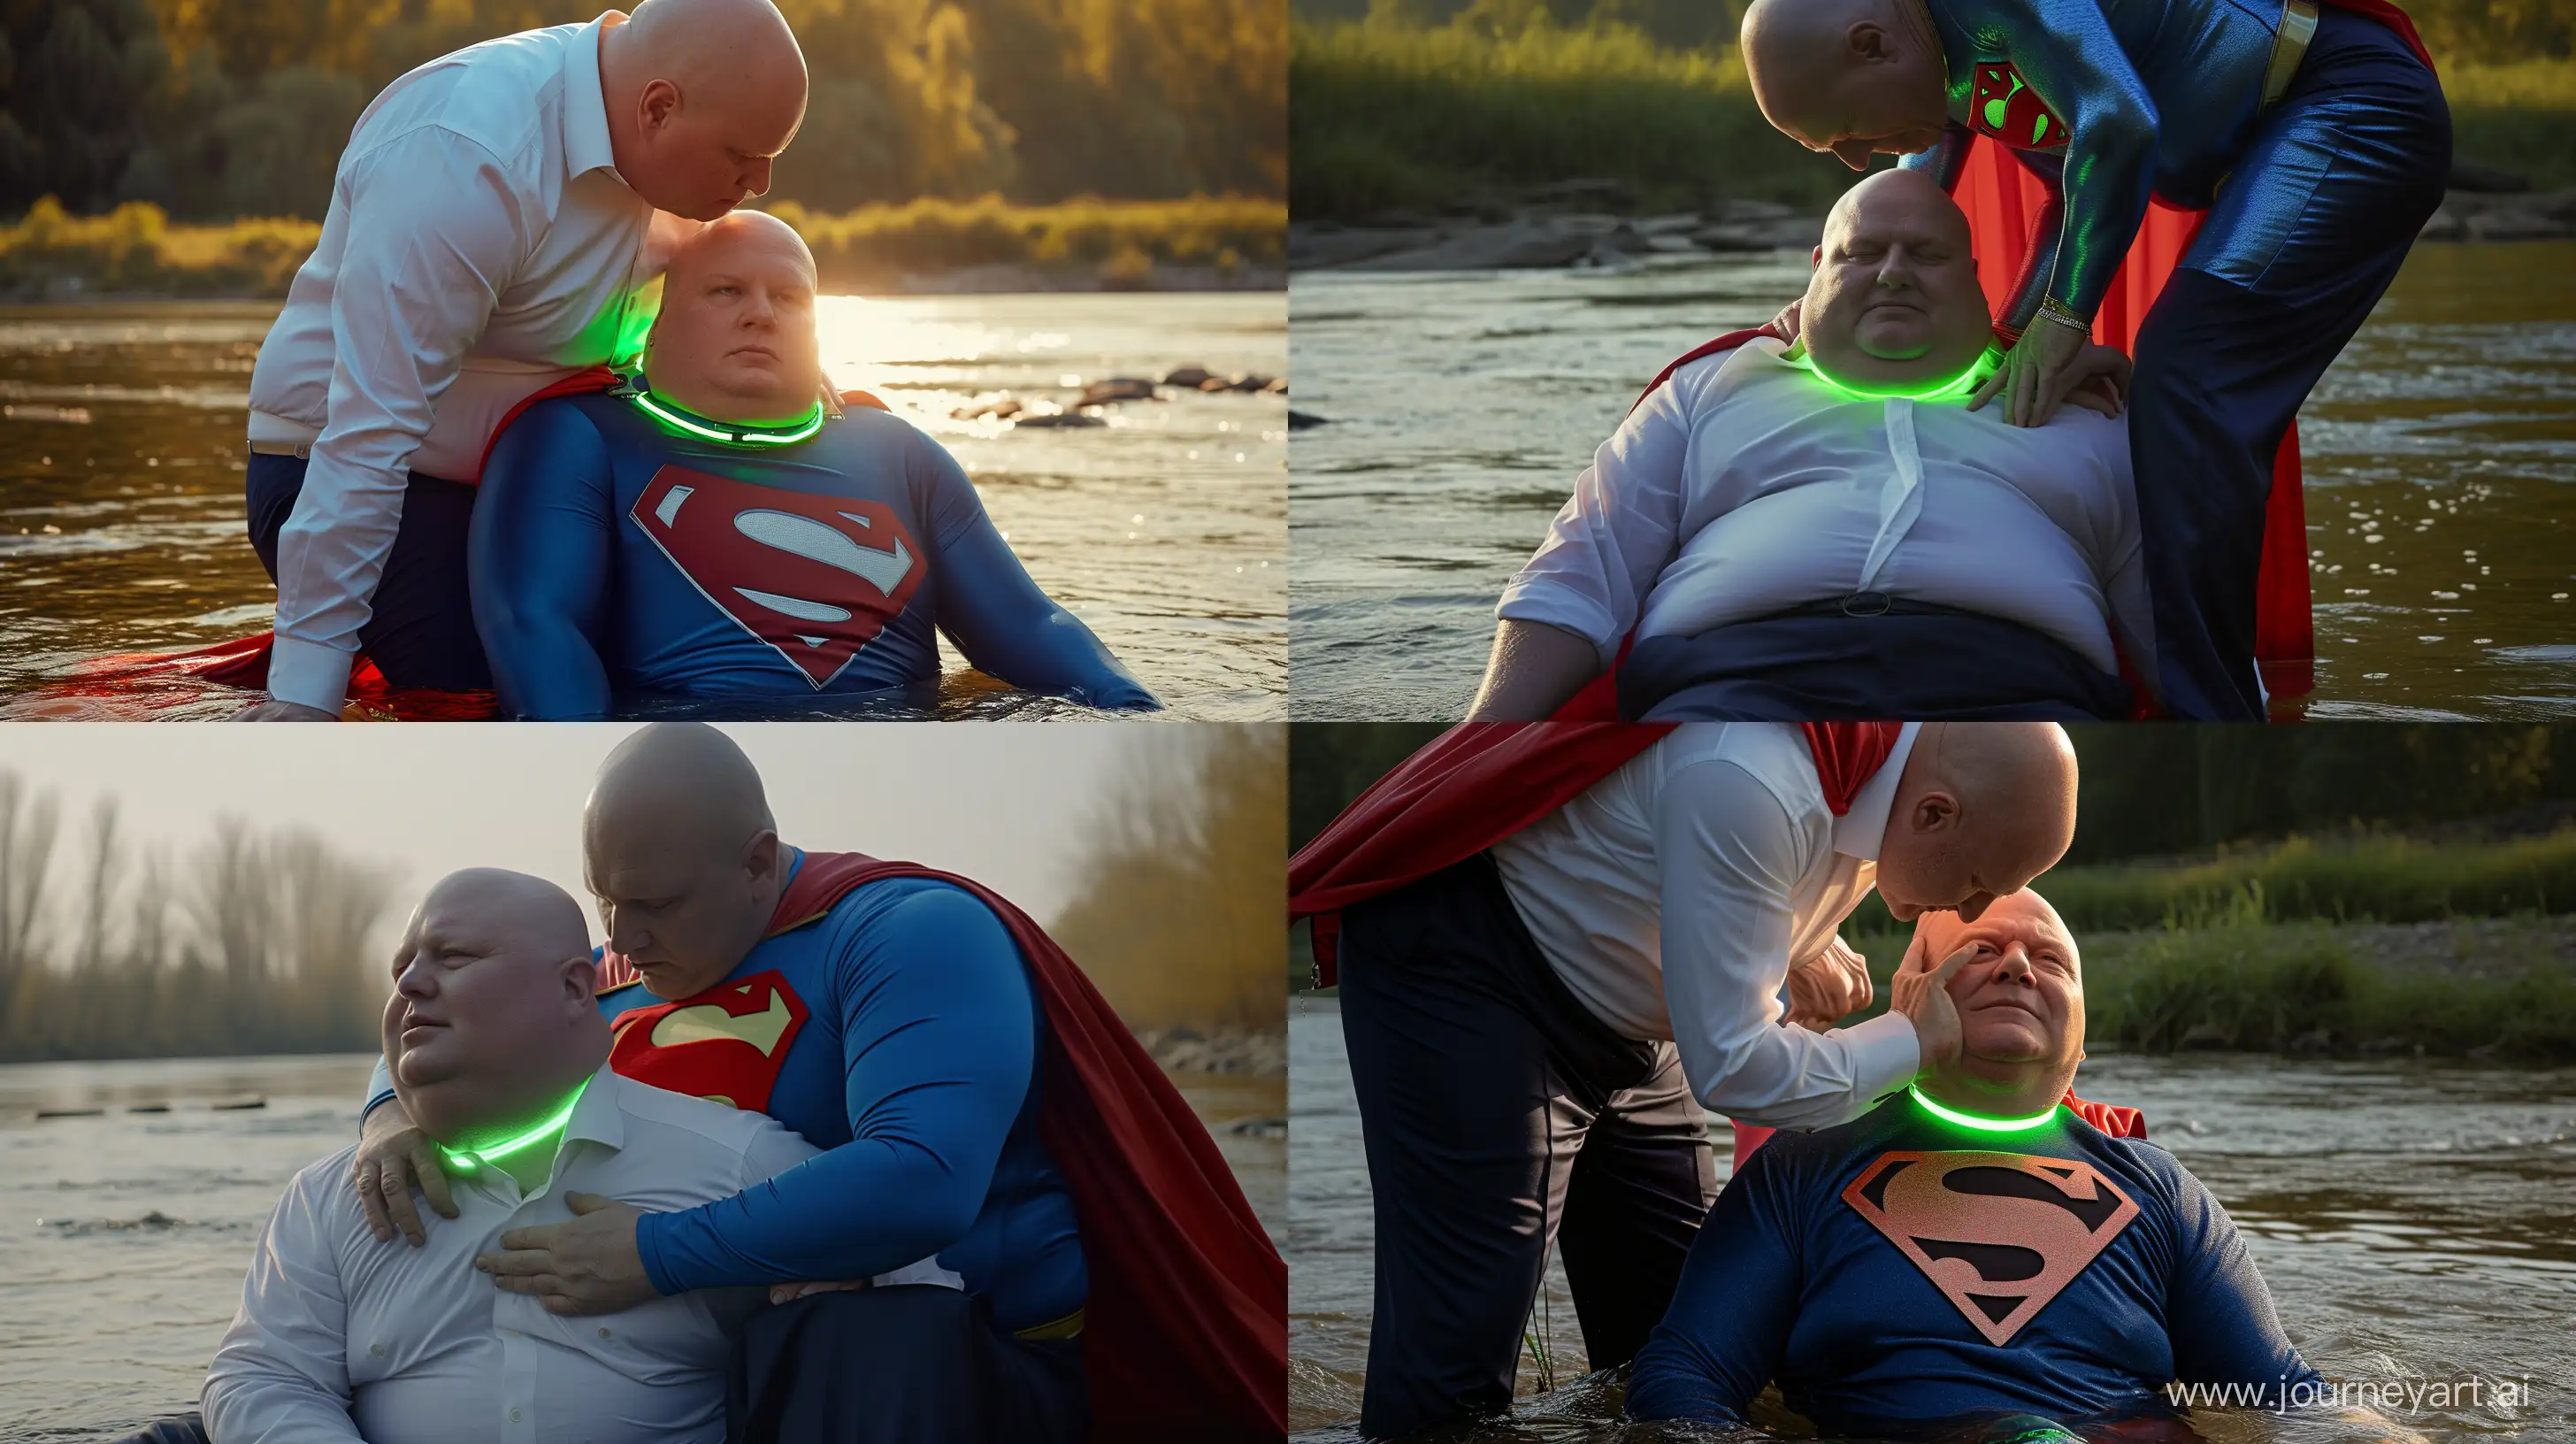 Eccentric-Supermanthemed-River-Scene-Senior-Man-Receives-Unique-Neon-Dog-Collar